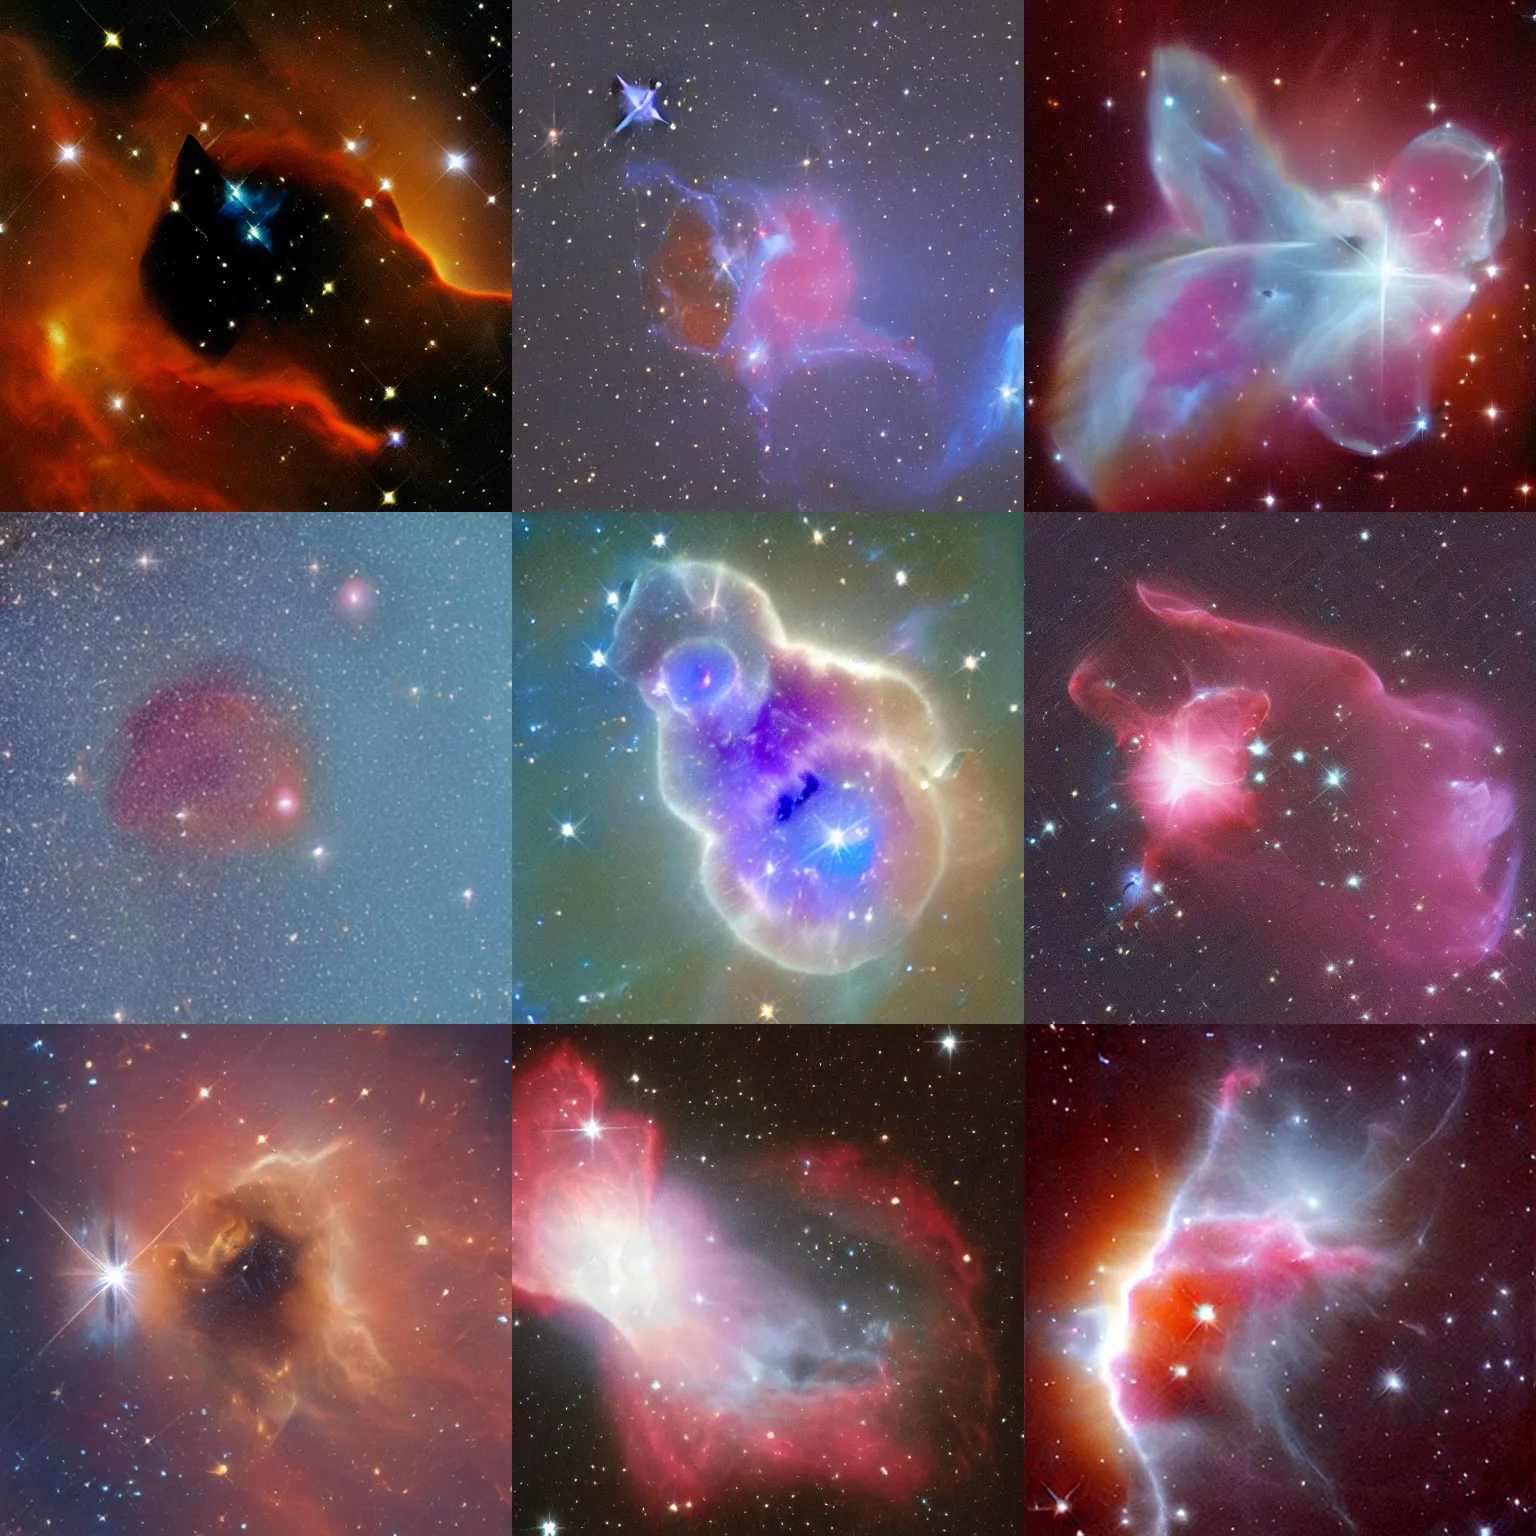 Prompt: Cat-shaped nebula, photo taken by Hubble telescope